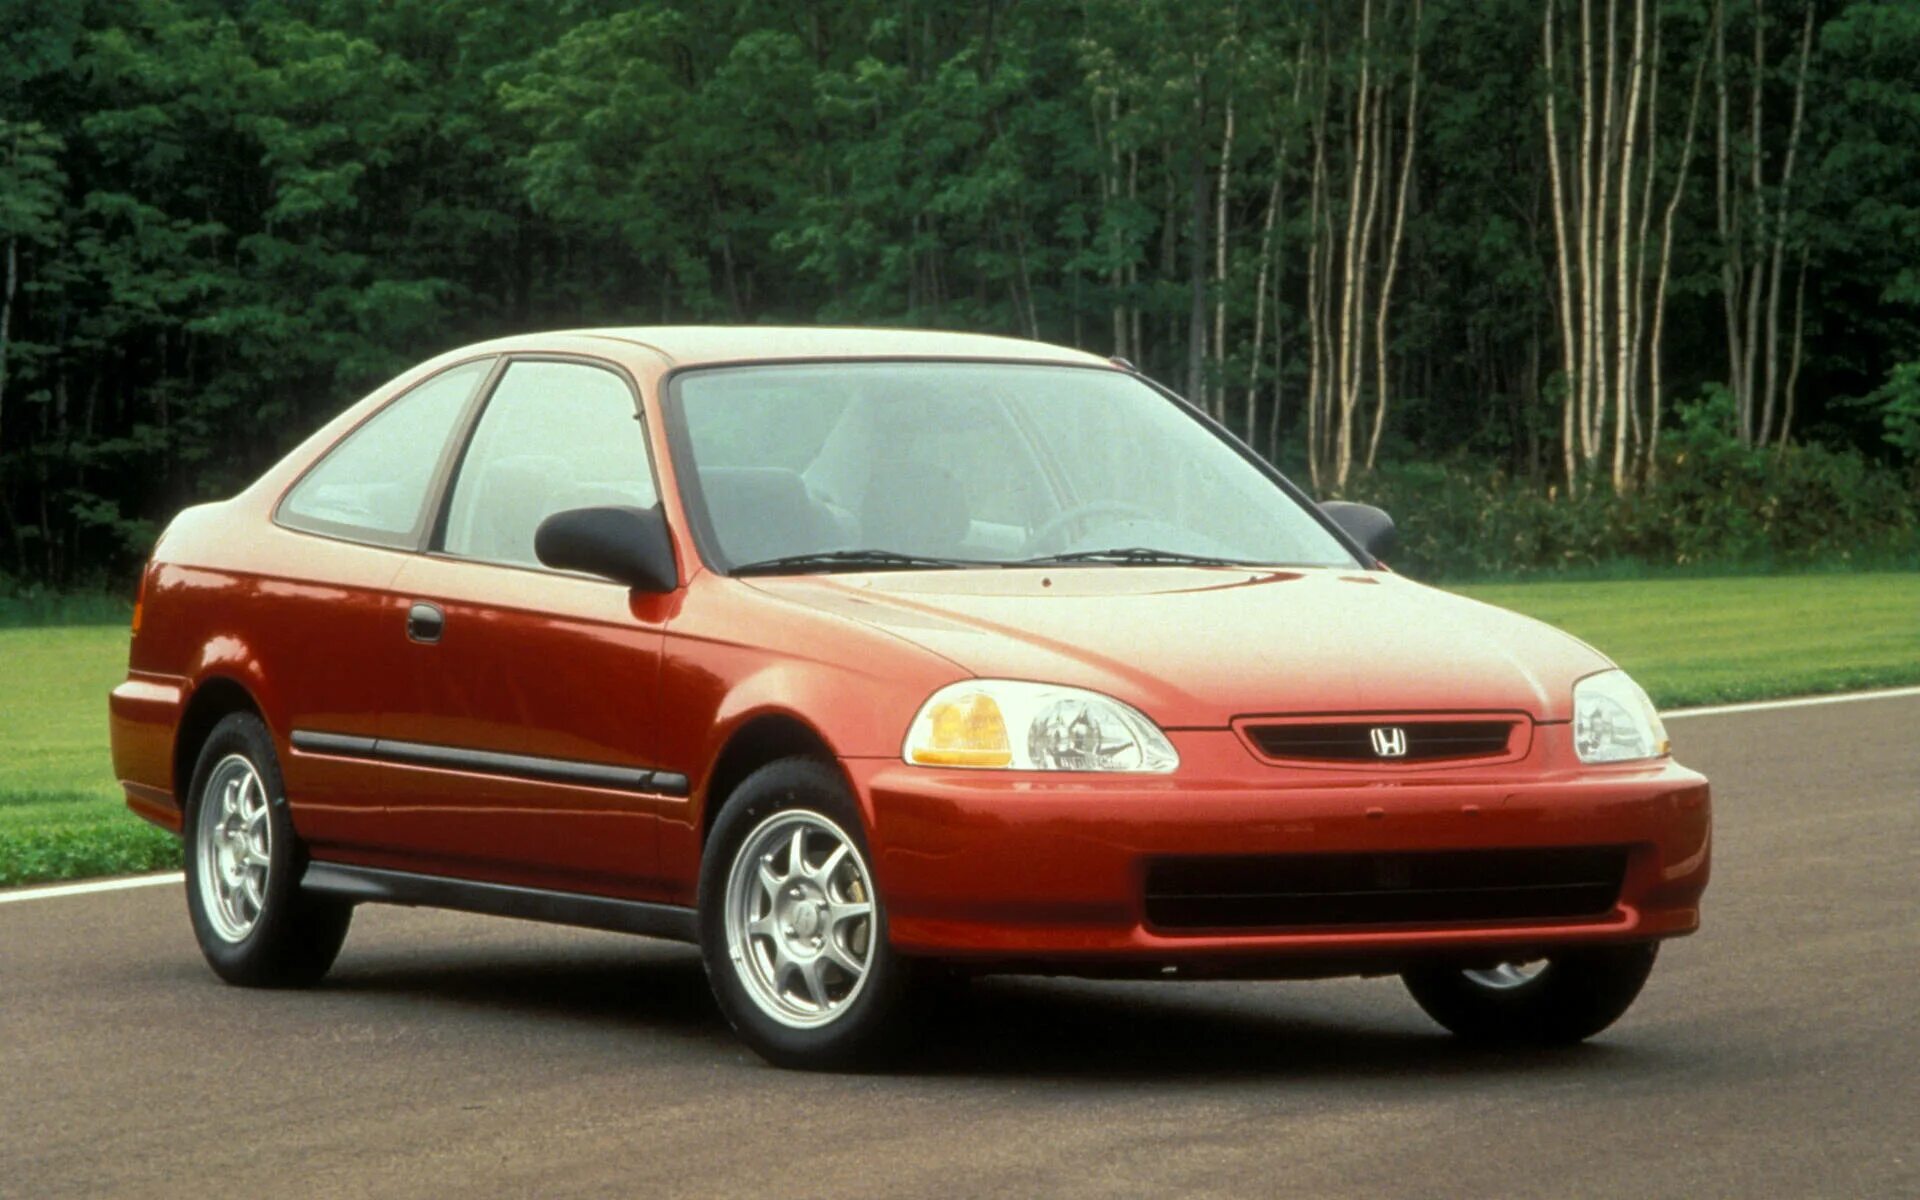 Honda civic купе. Honda Civic 1996 6 поколение. Хонда Цивик 6 поколения 1996. Хонда Цивик 6 поколение хэтчбек. Хонда Цивик 2000 6 поколение.